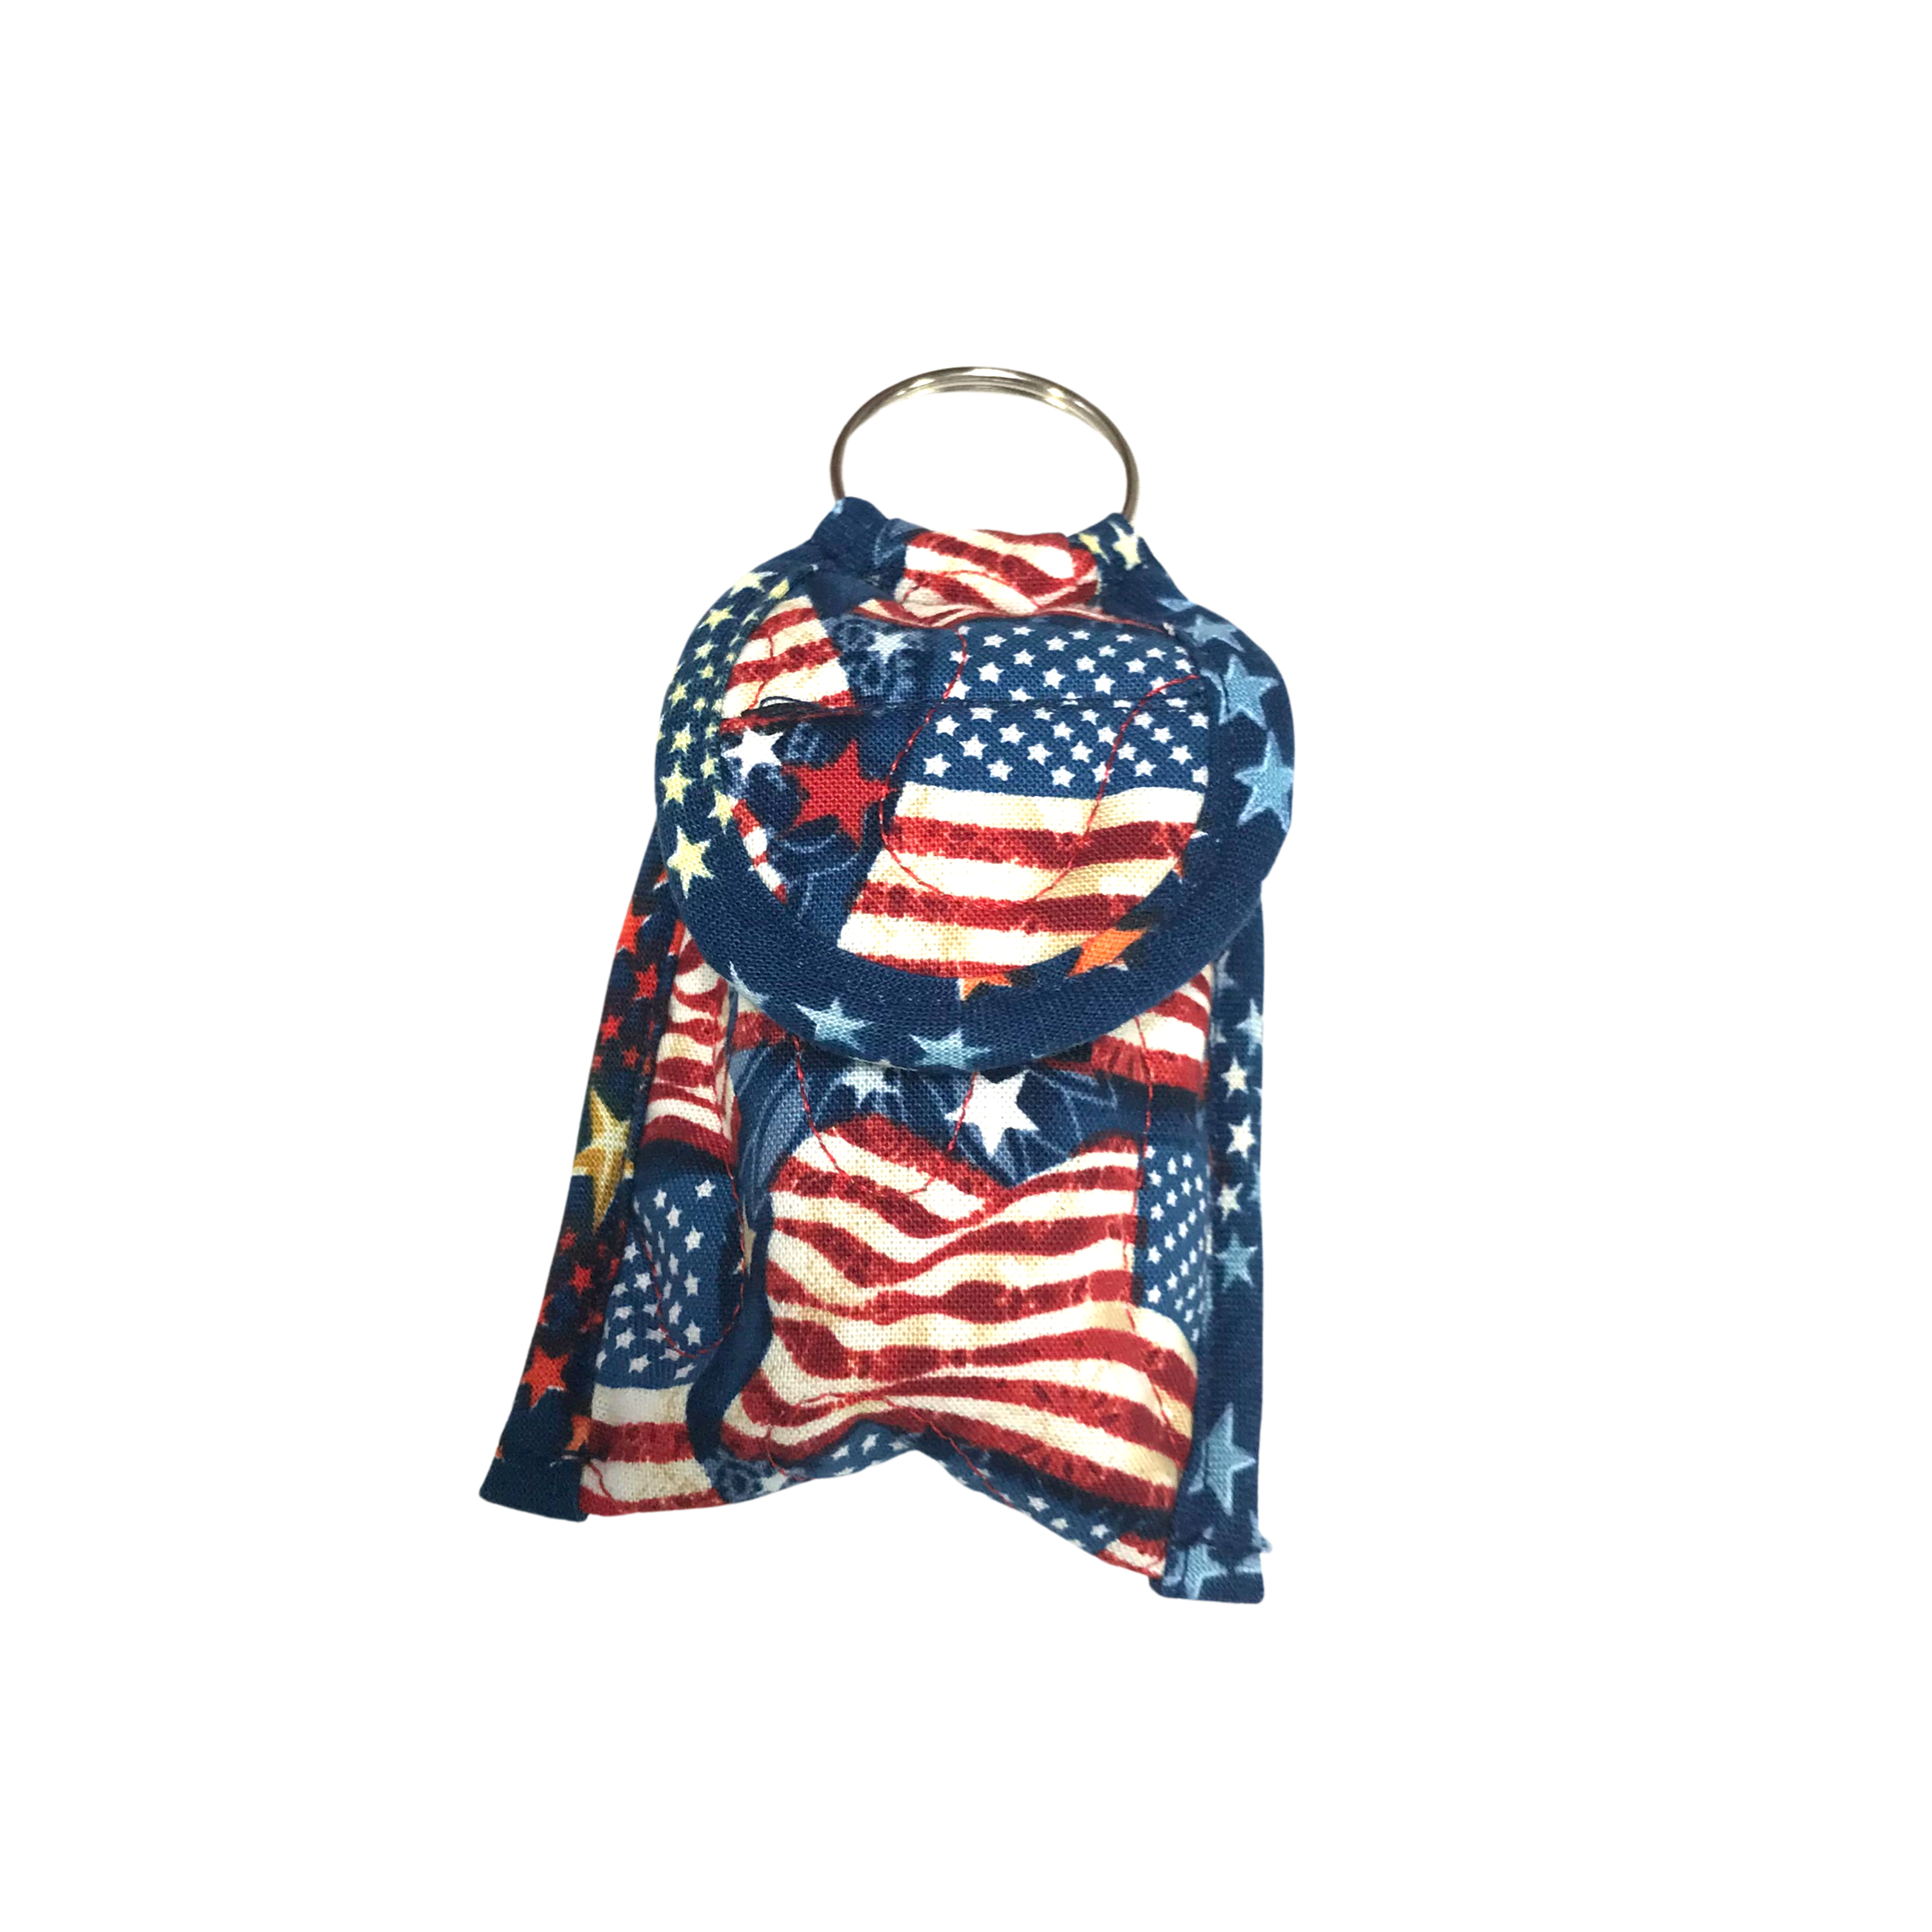 Itty Bitty Bag - American Flag